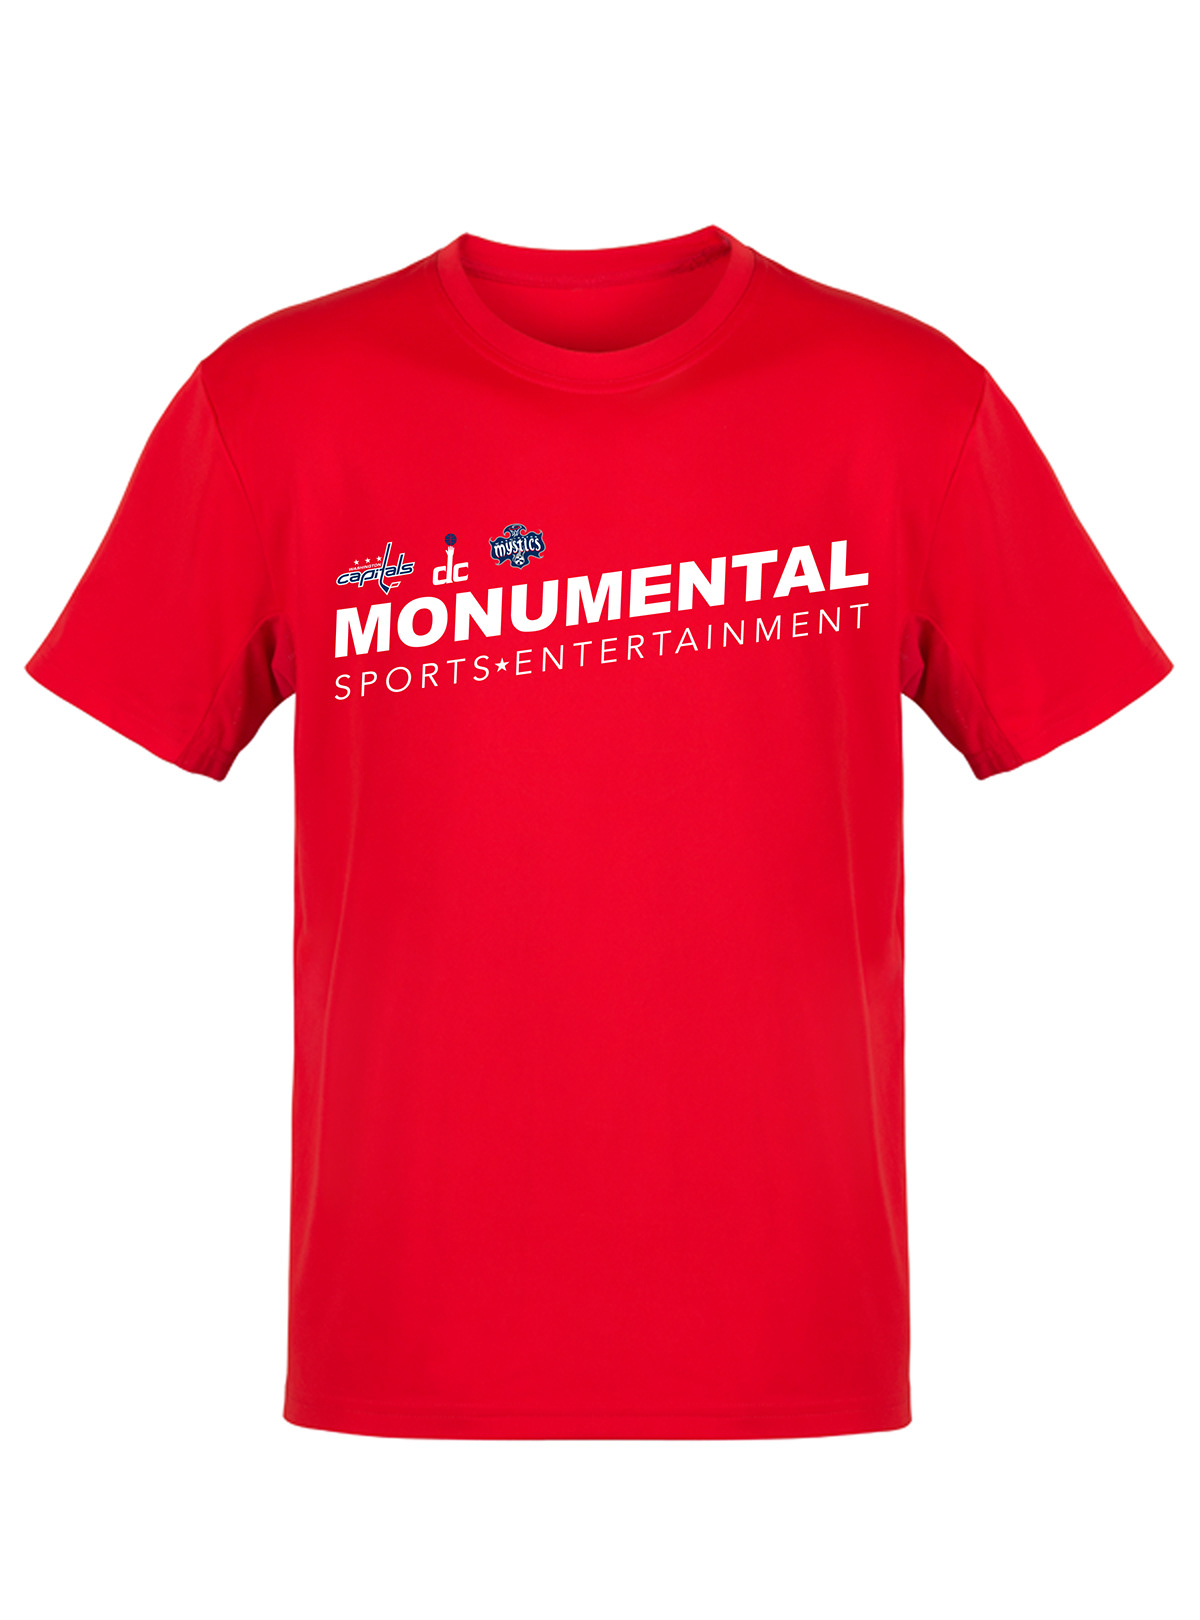 t-shirt tee design graphic red monumental sports basketball hockey NBA WNBA NHL Verizon Center